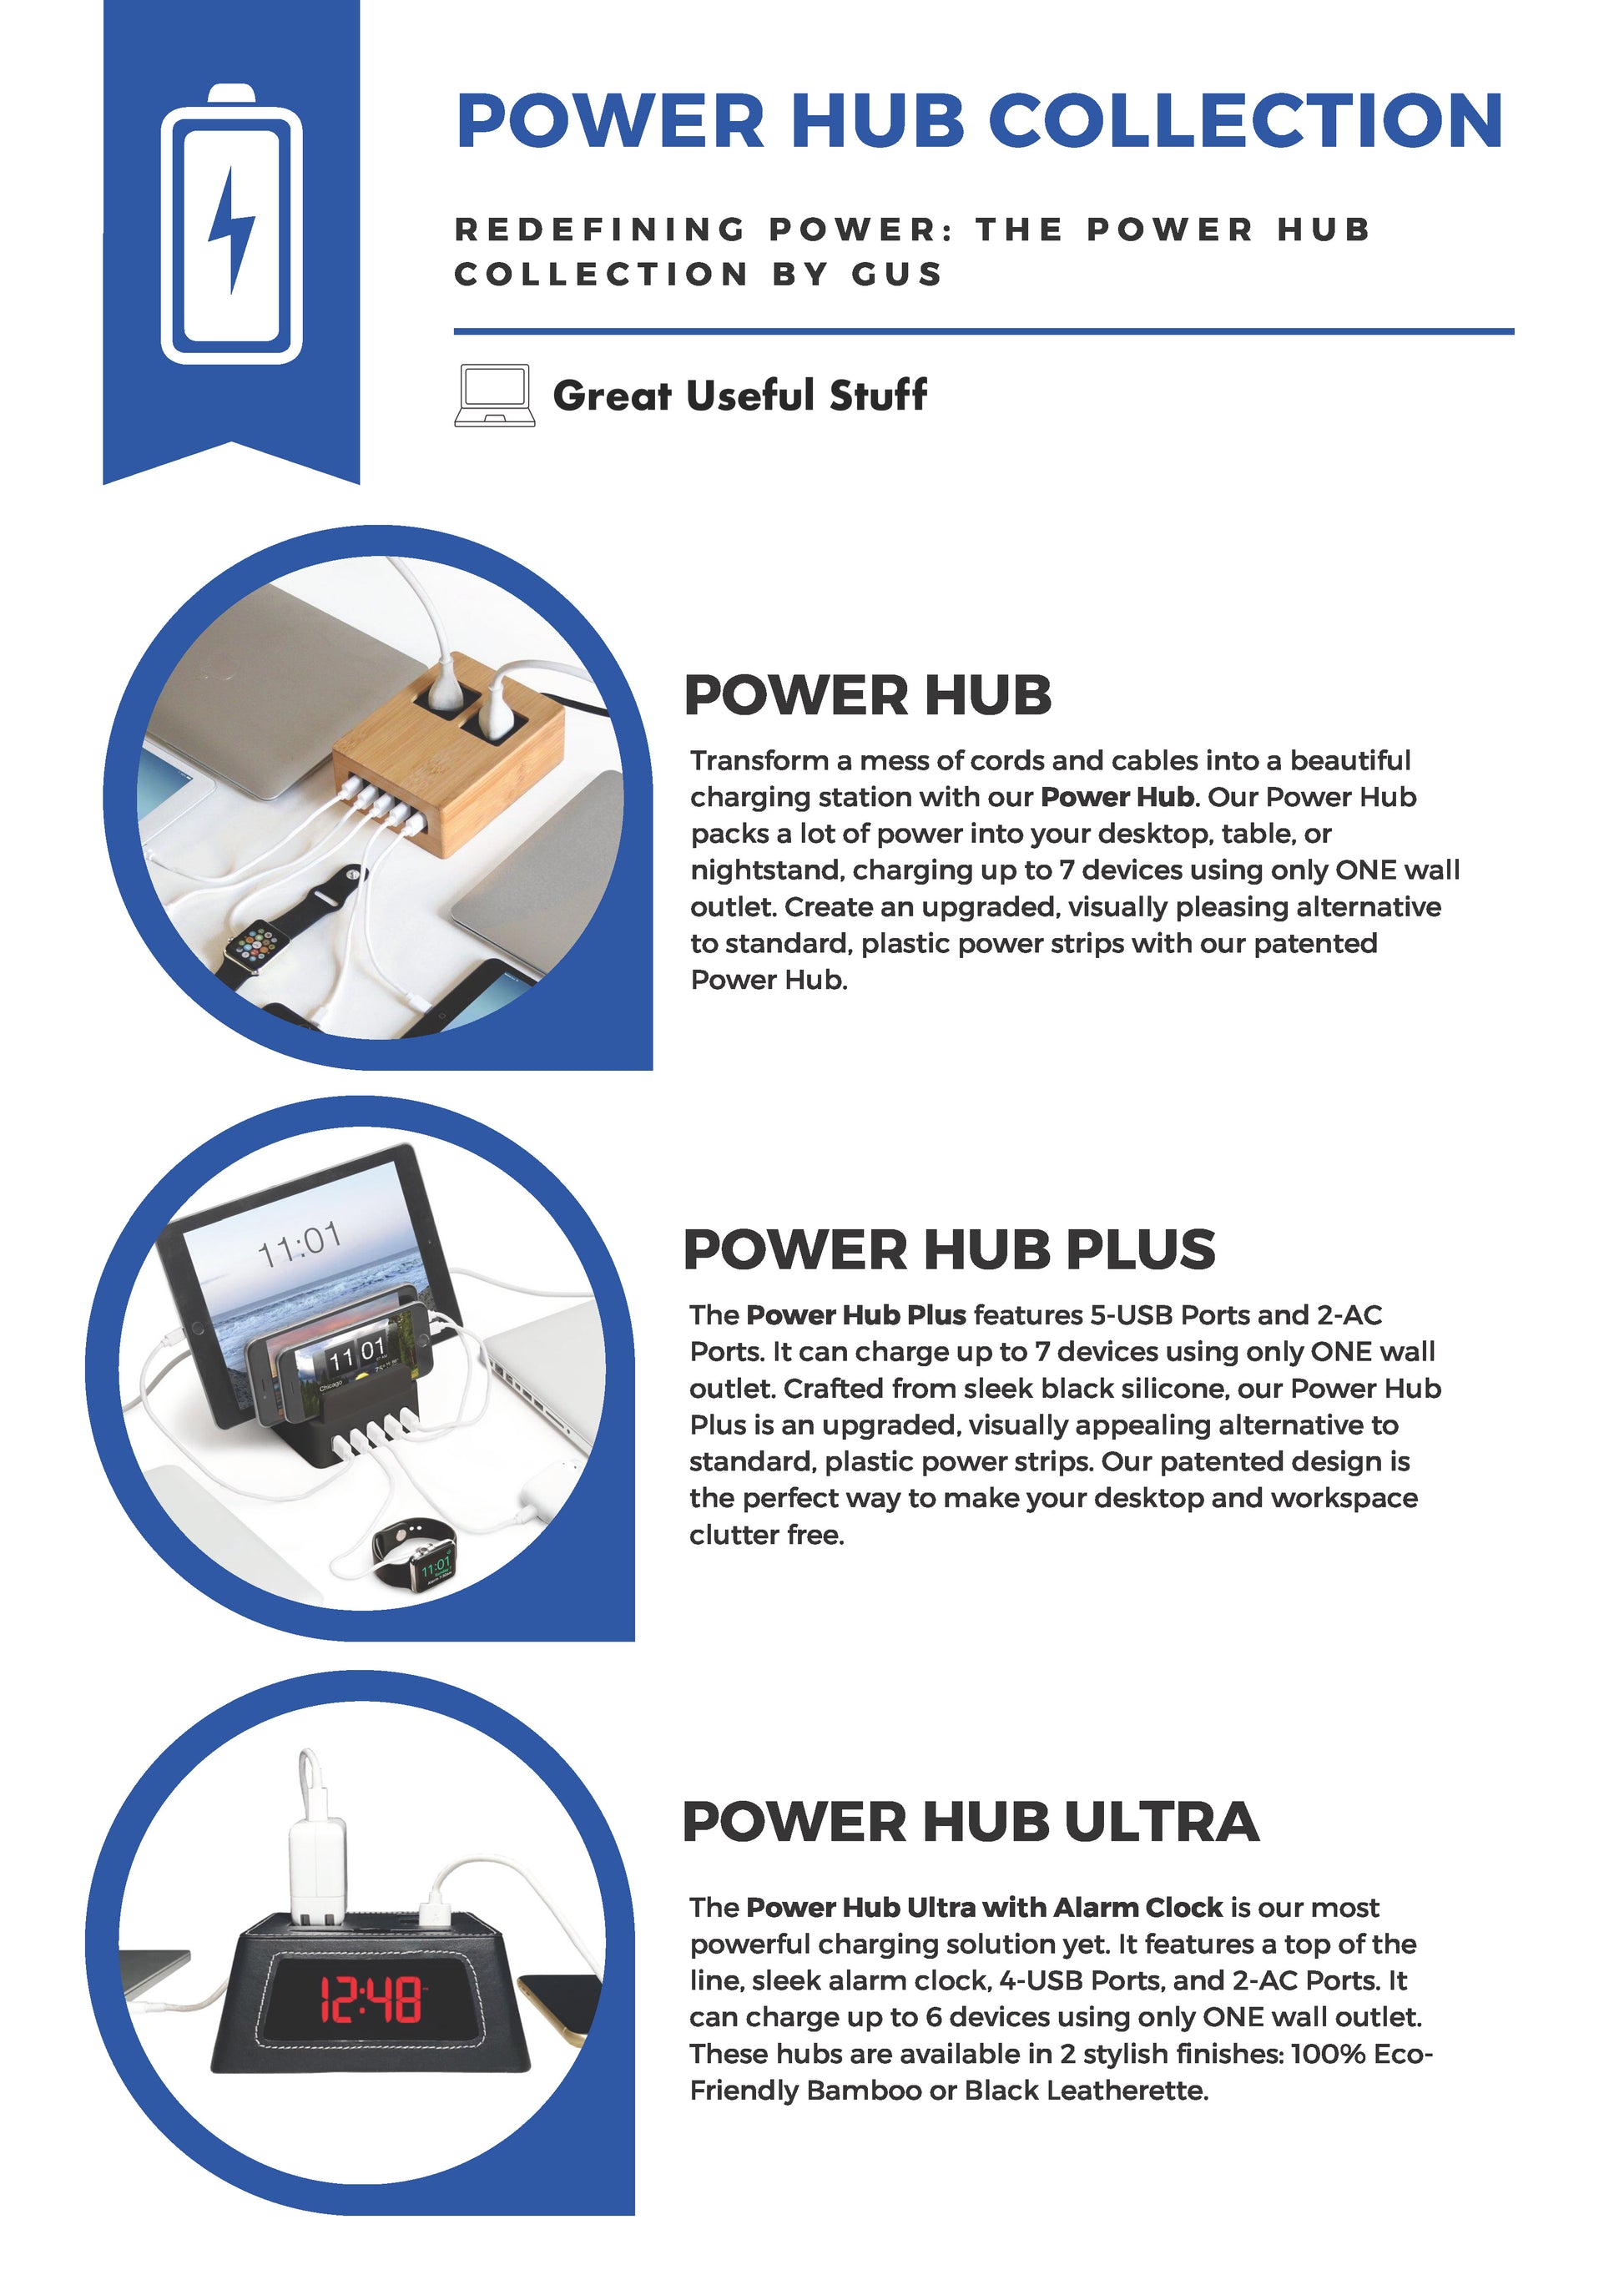 Power Hub Plus - Great Useful Stuff